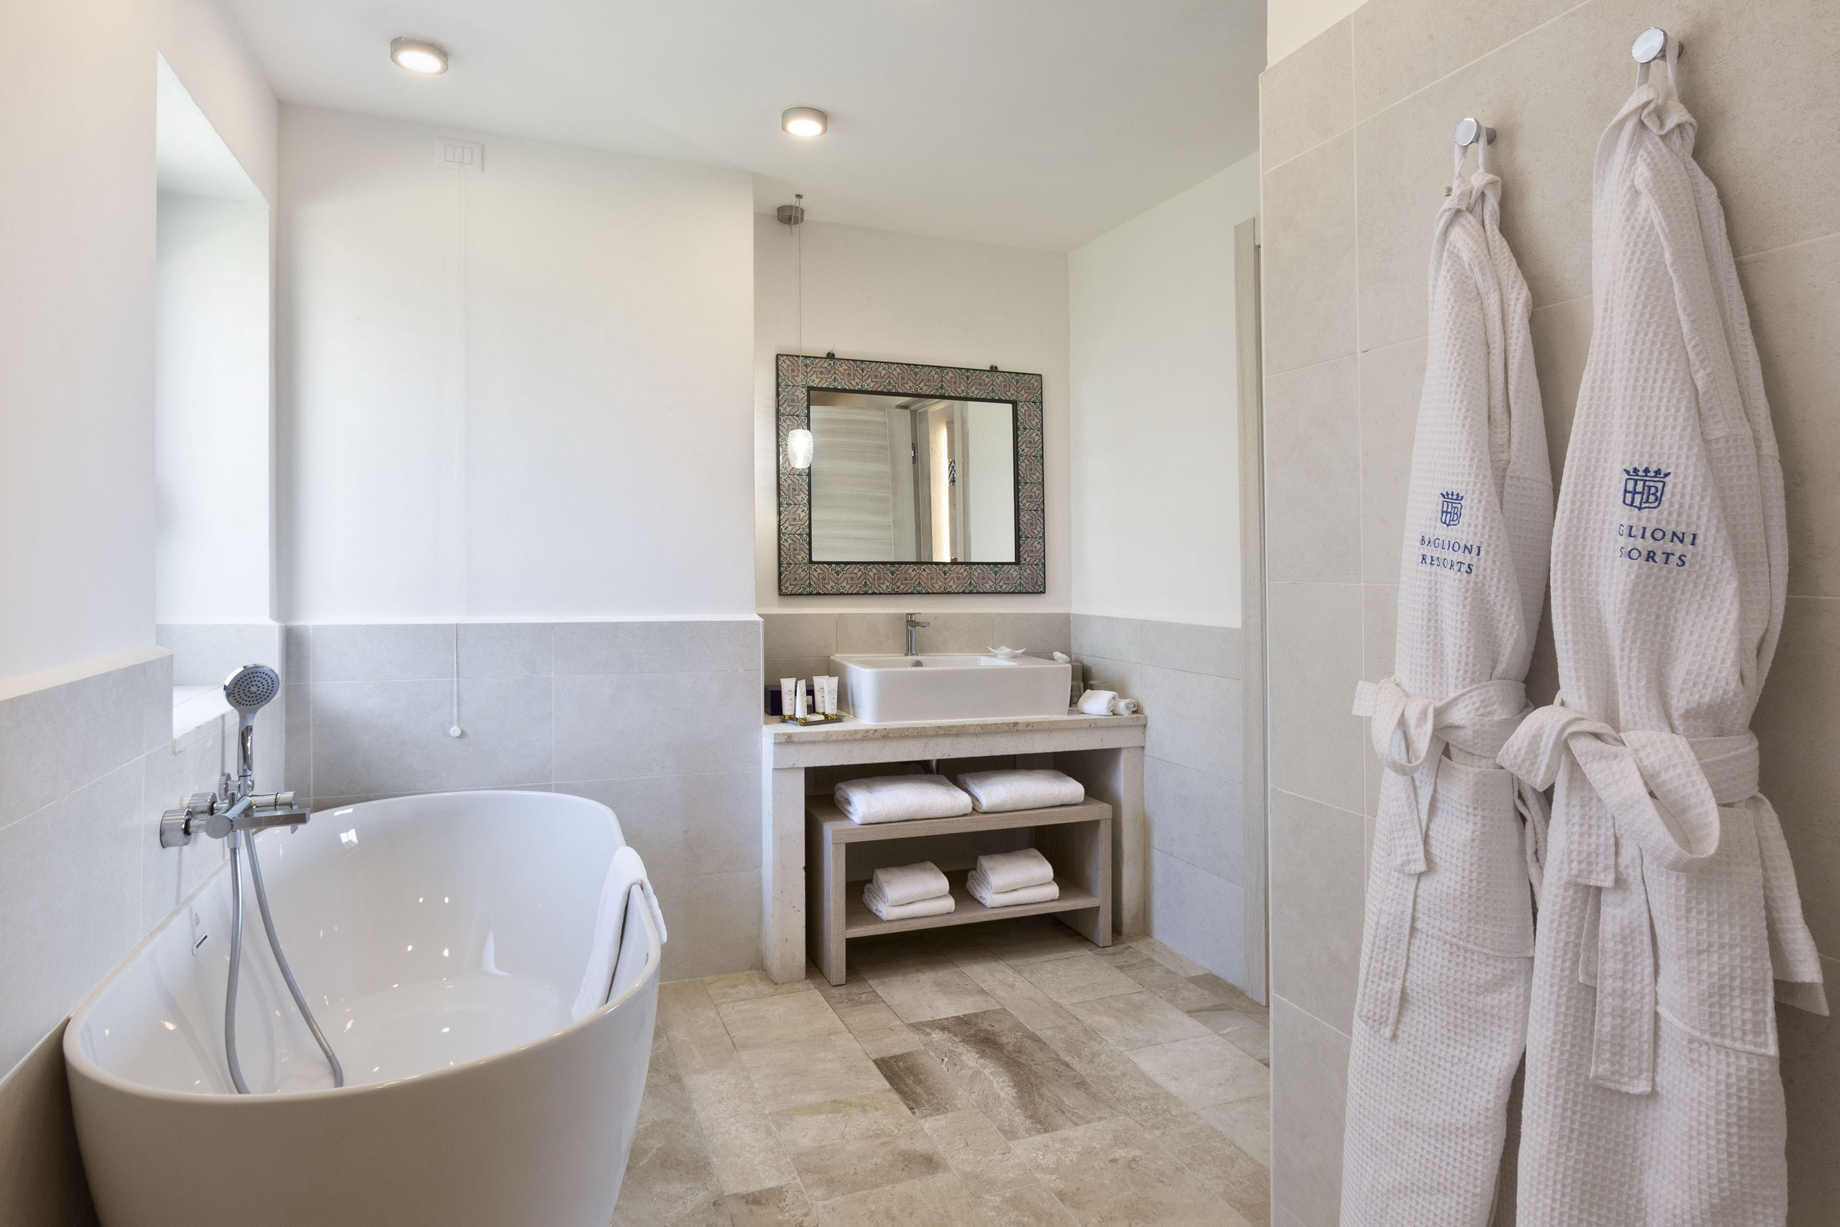 Baglioni Resort Sardinia – San Teodoro, Sardegna, Italy – Maddalena Suite Bathroom